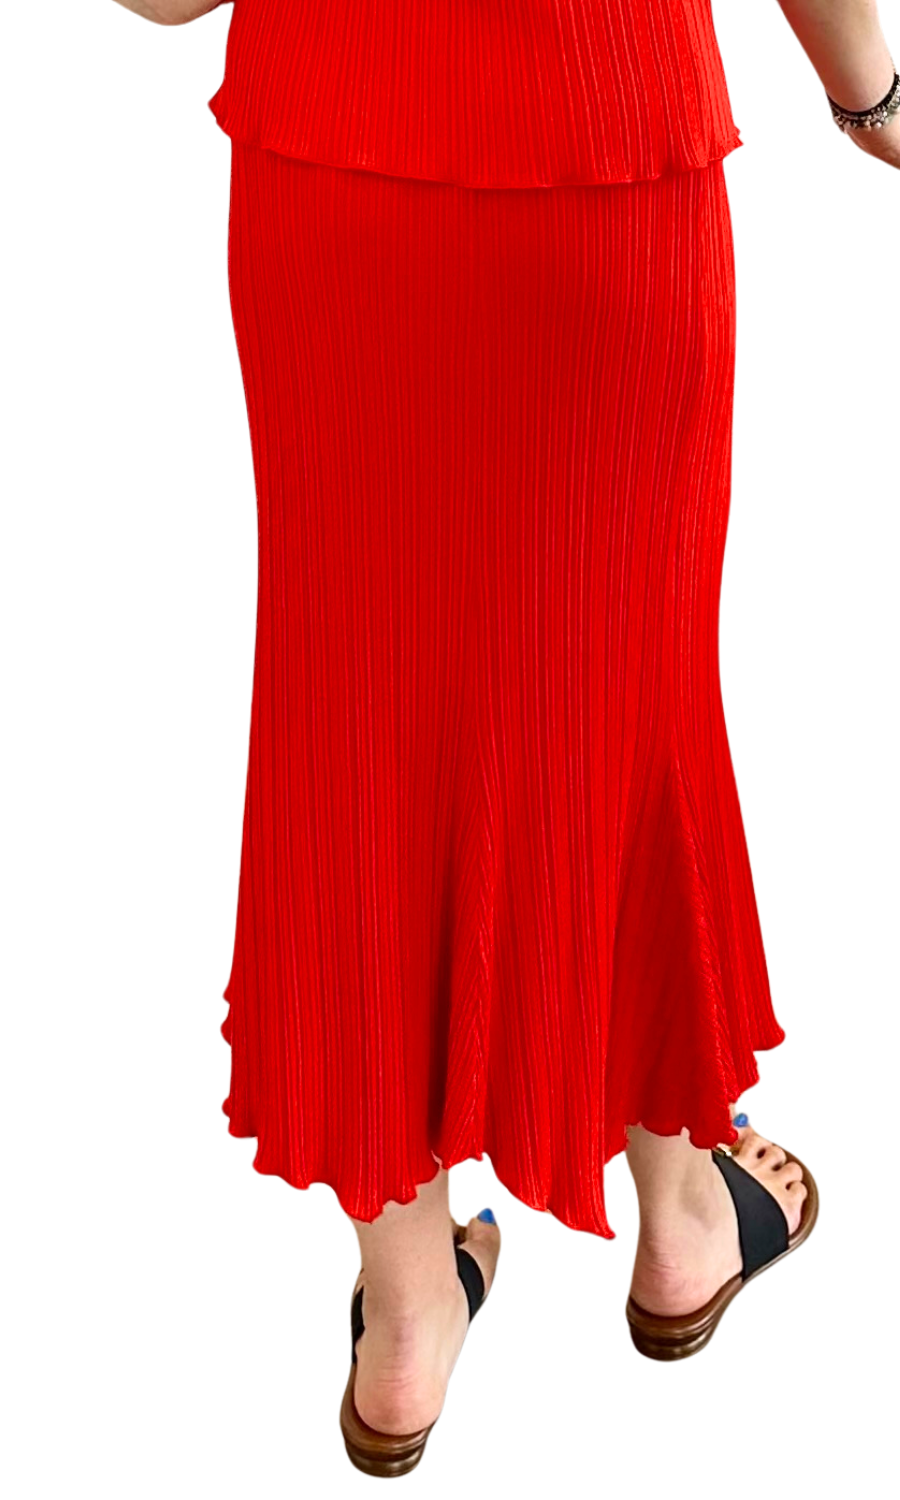 Fenini Pleat Knit Flair Skirt in Poppy SALE!